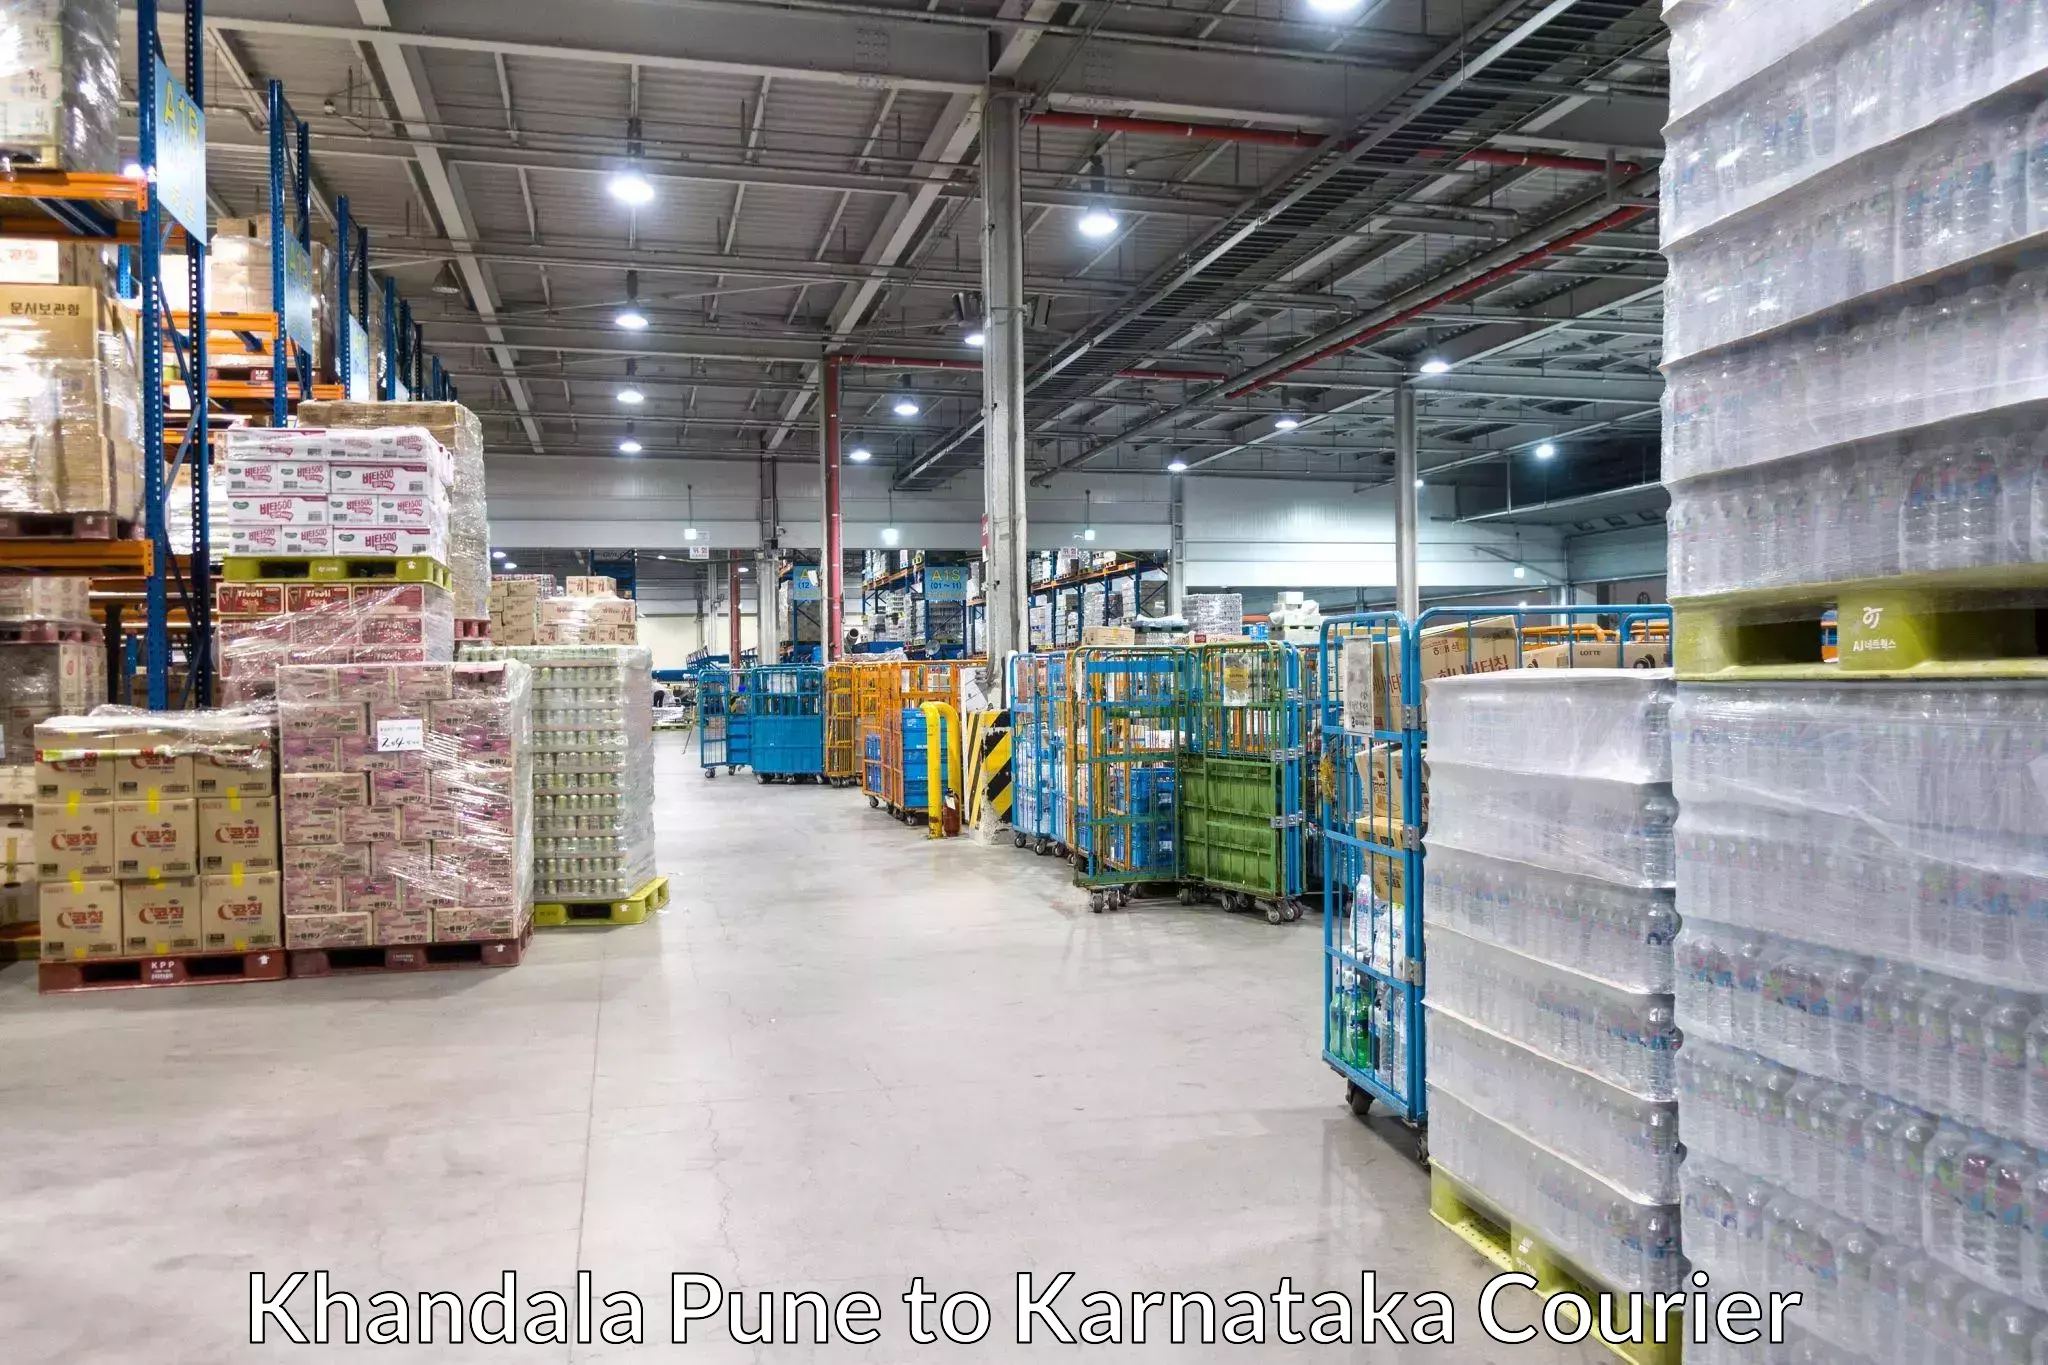 Customer-centric shipping Khandala Pune to Ballari